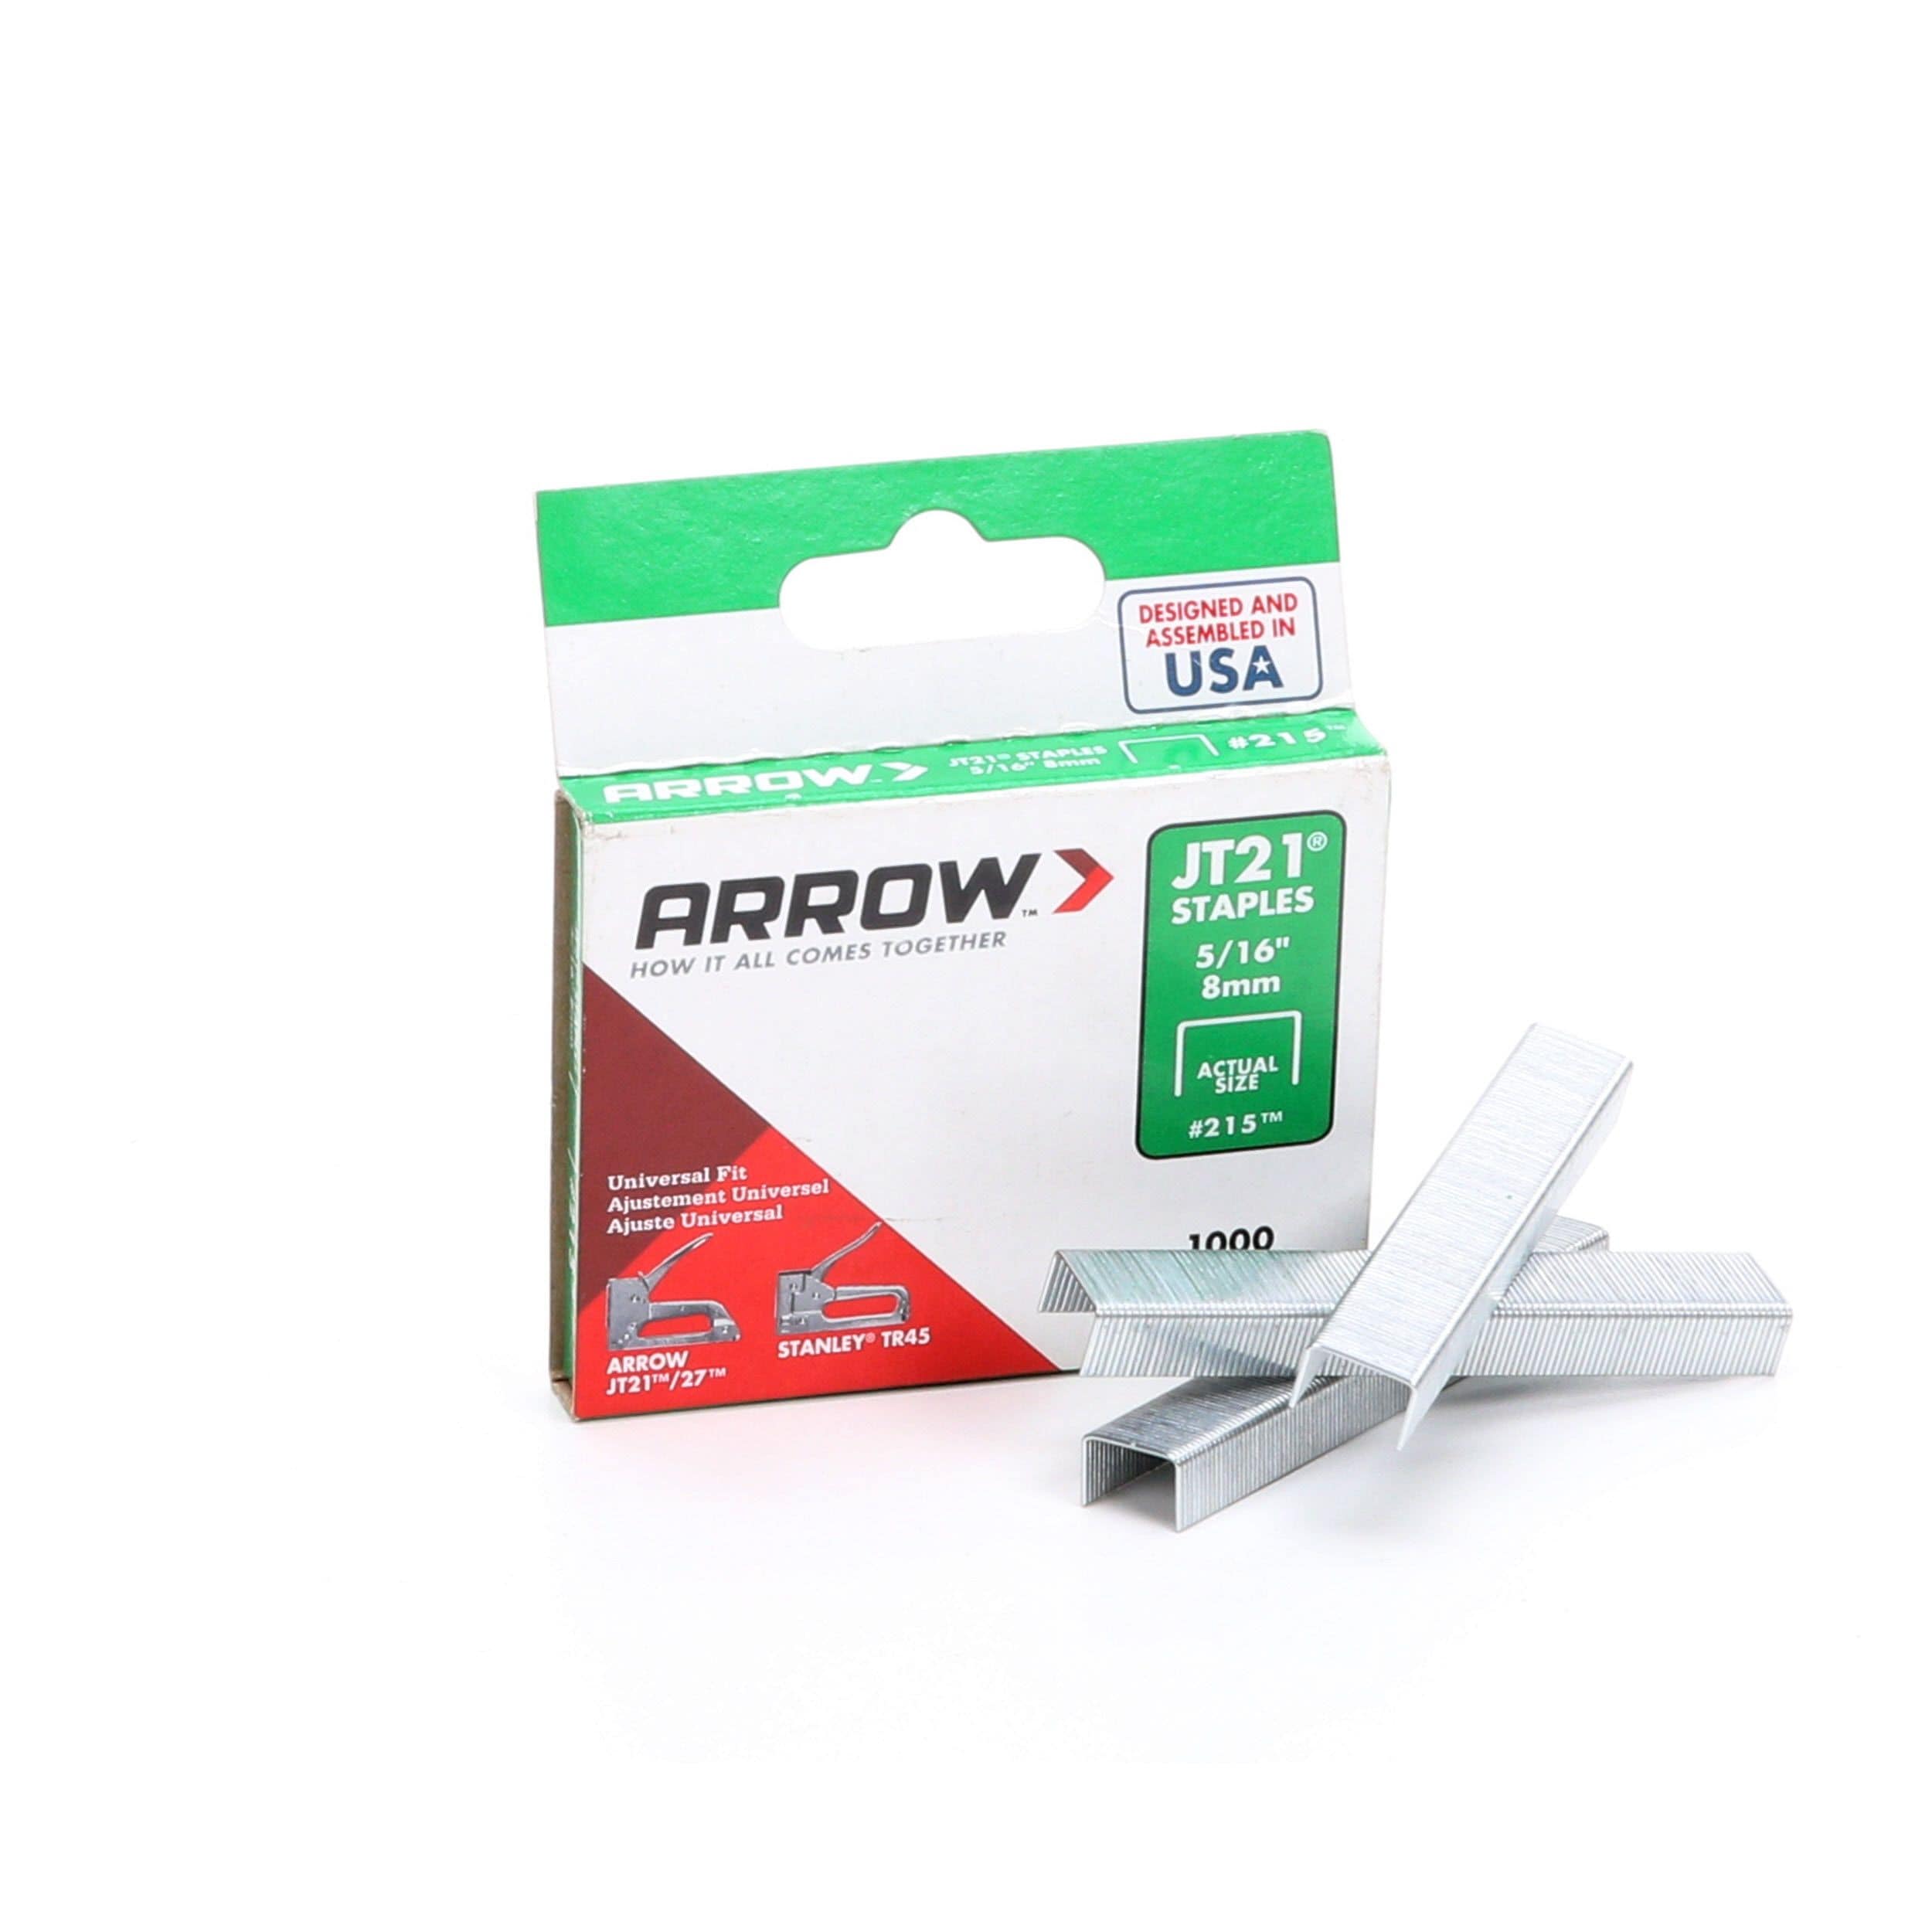 Arrow Narrow Crown Light Wire Staples  #215  5/16"  1,000 pieces  NEW 